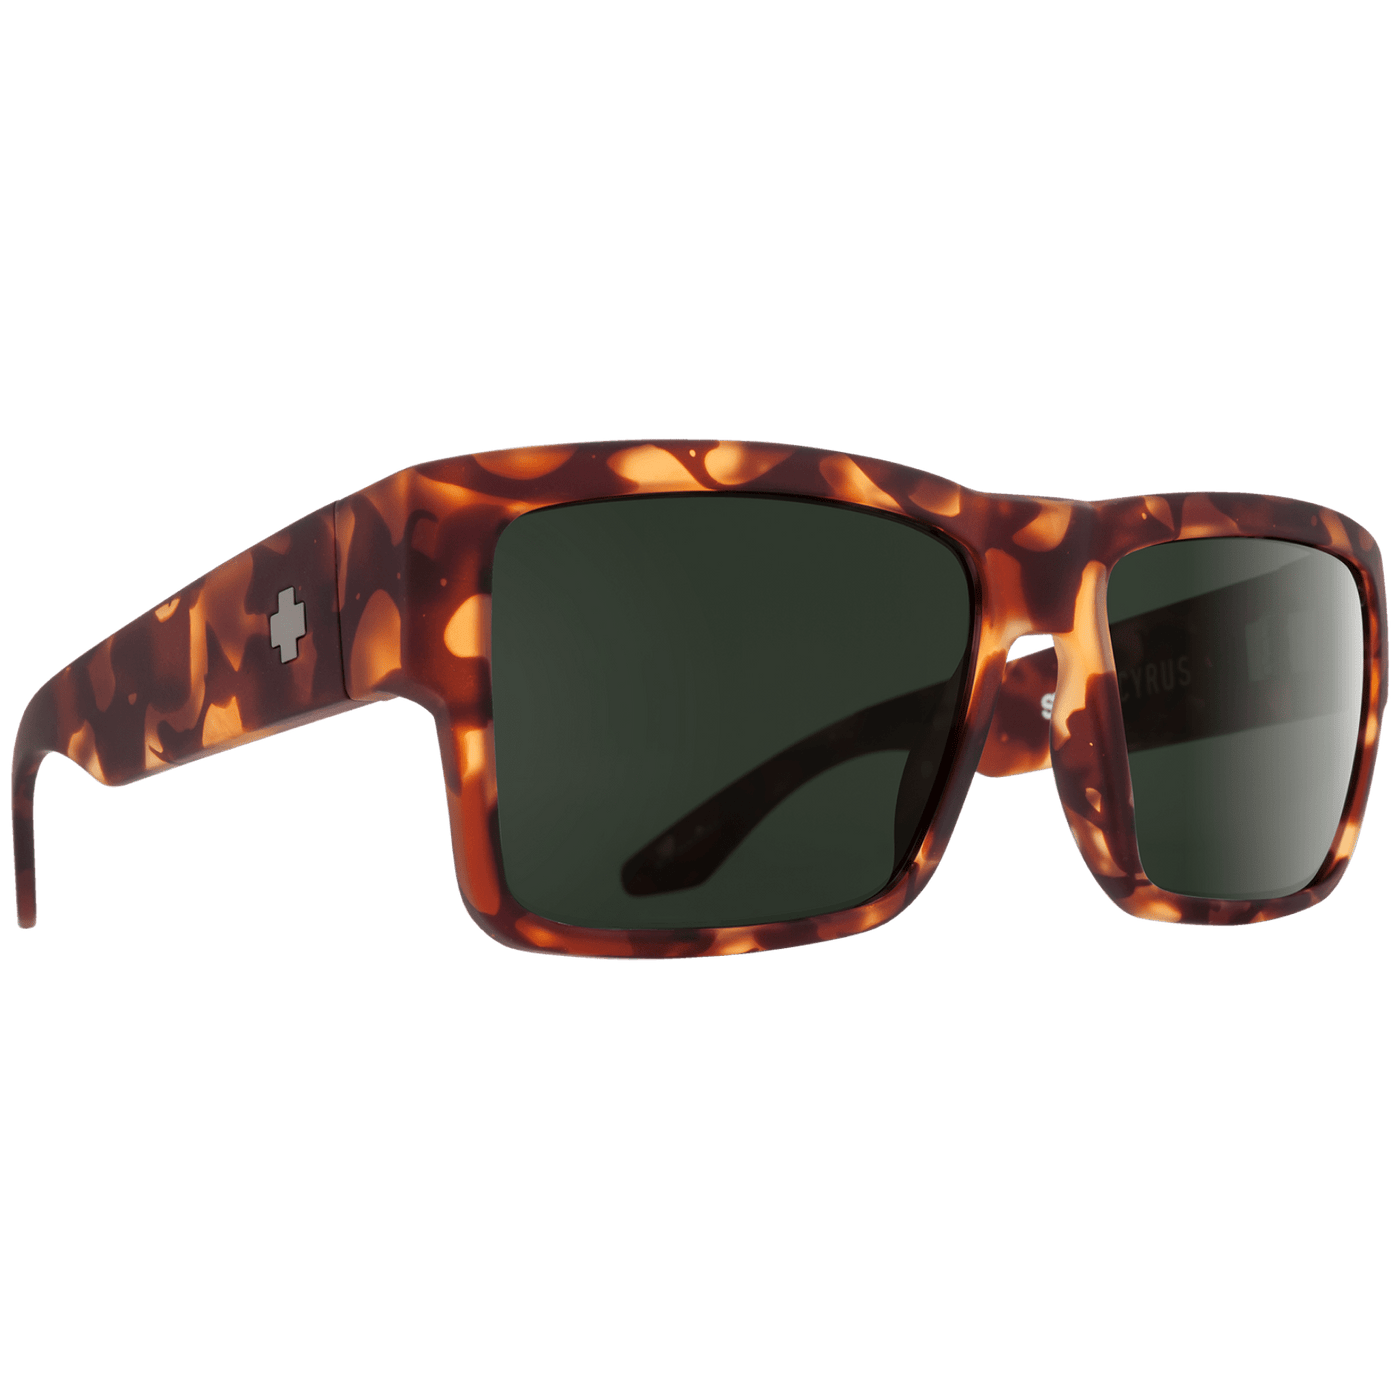 SPY CYRUS Sunglasses, Happy Lens - Camo Tort